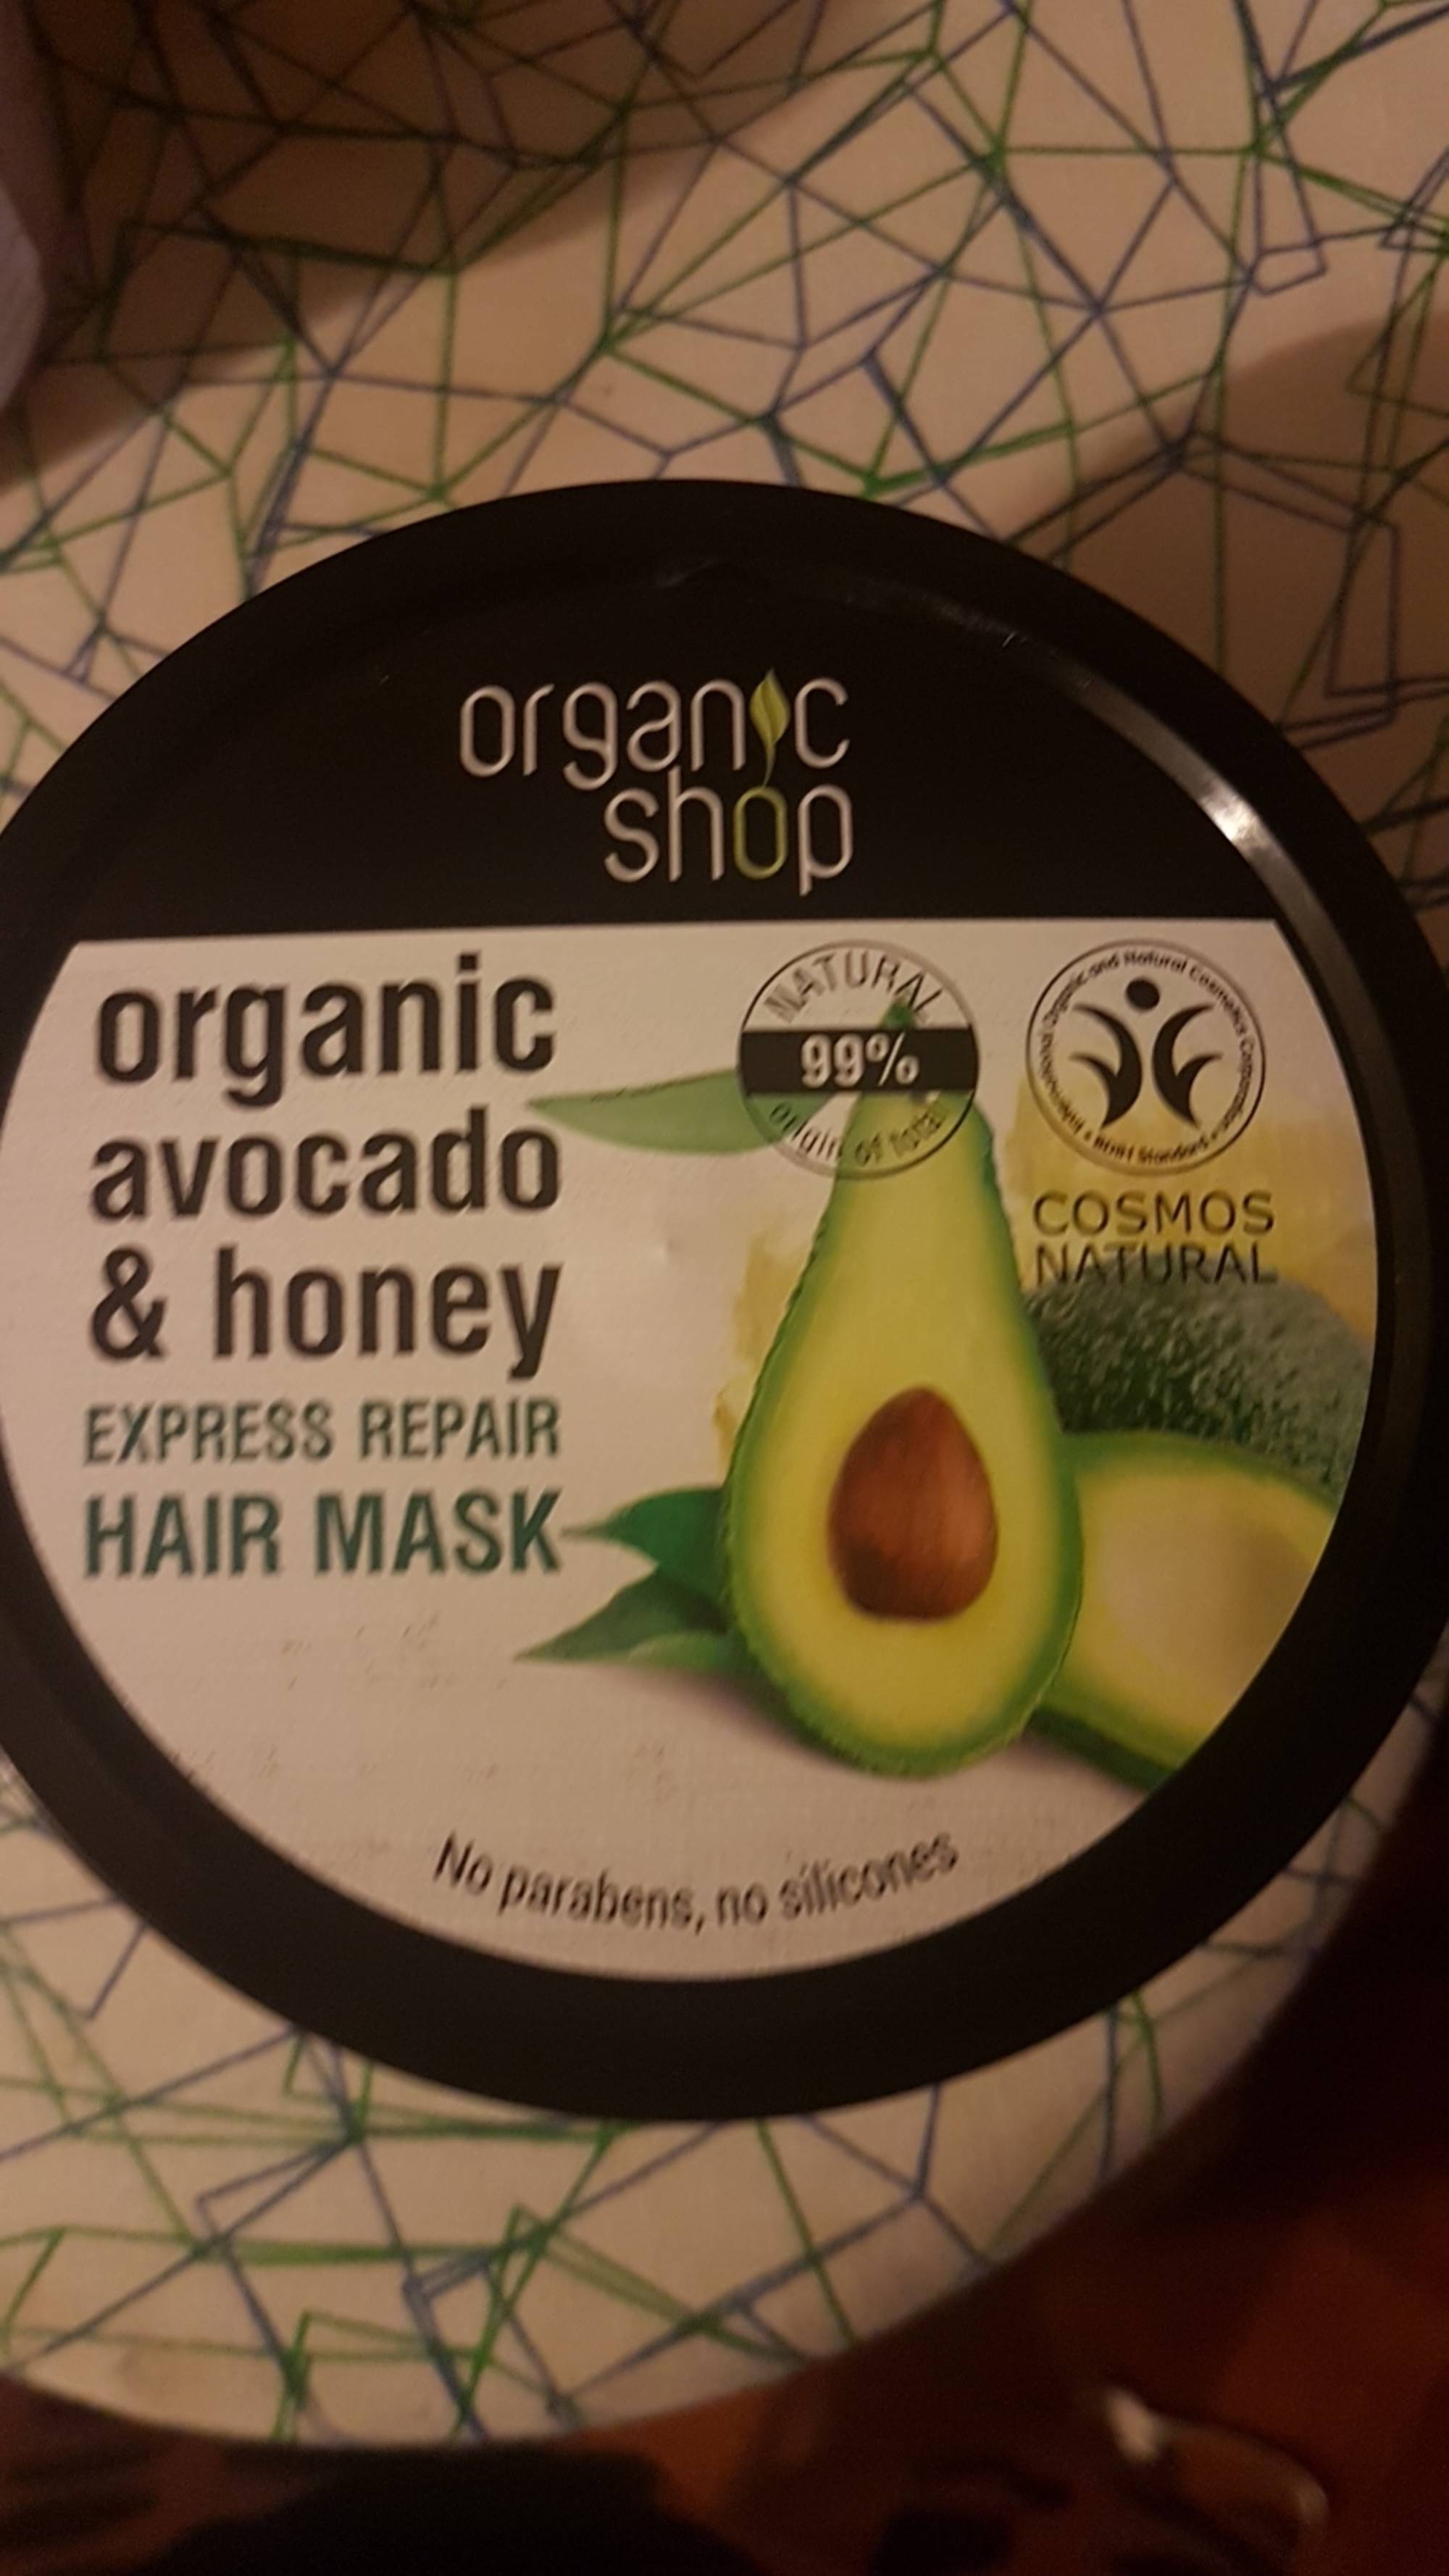 ORGANIC SHOP - Organic avocado & honey - Hair mask